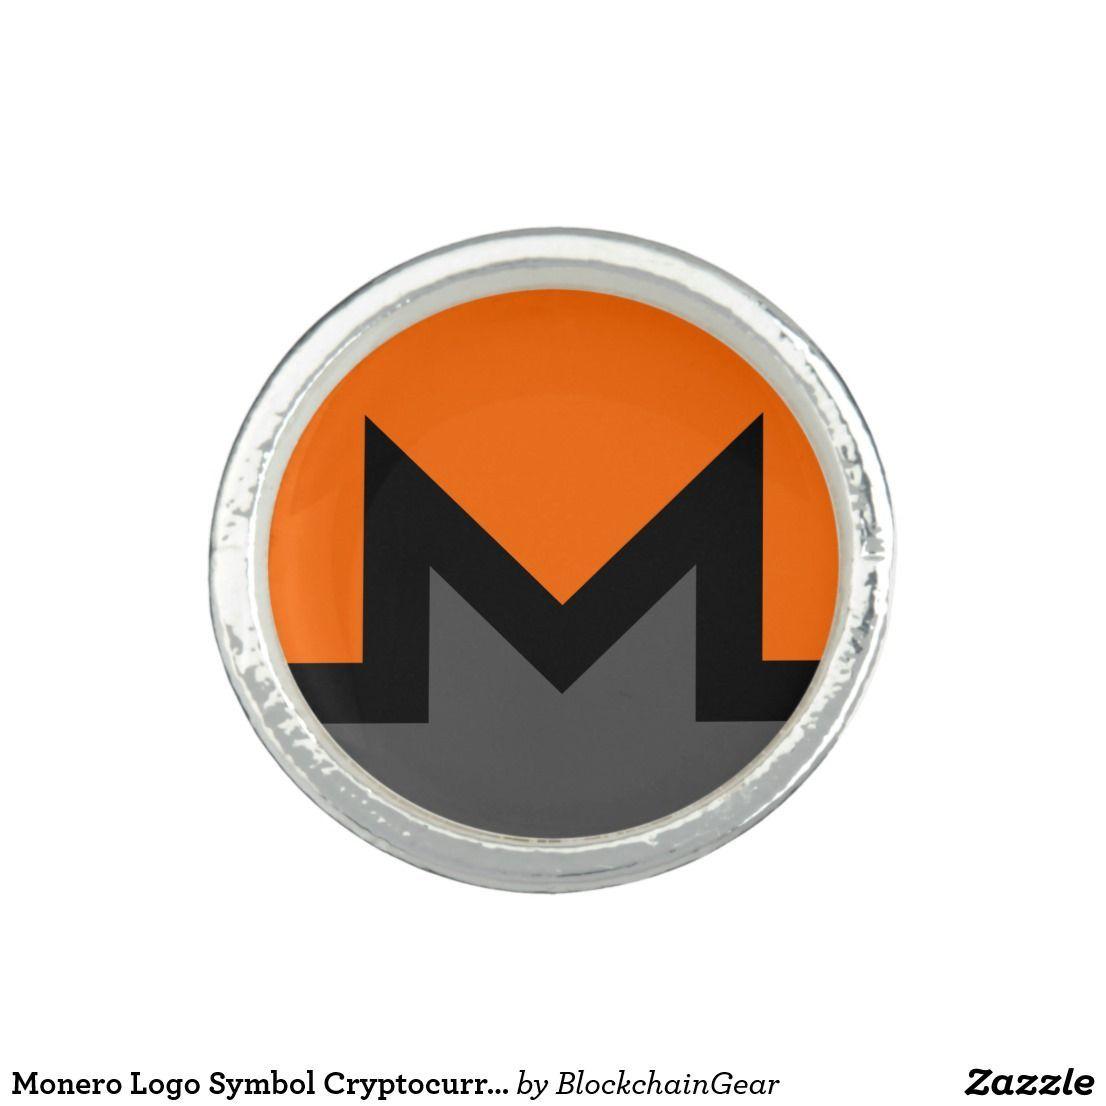 Monero Logo - Monero Logo Symbol Cryptocurrency Coin Ring | Blockchain Gear ...